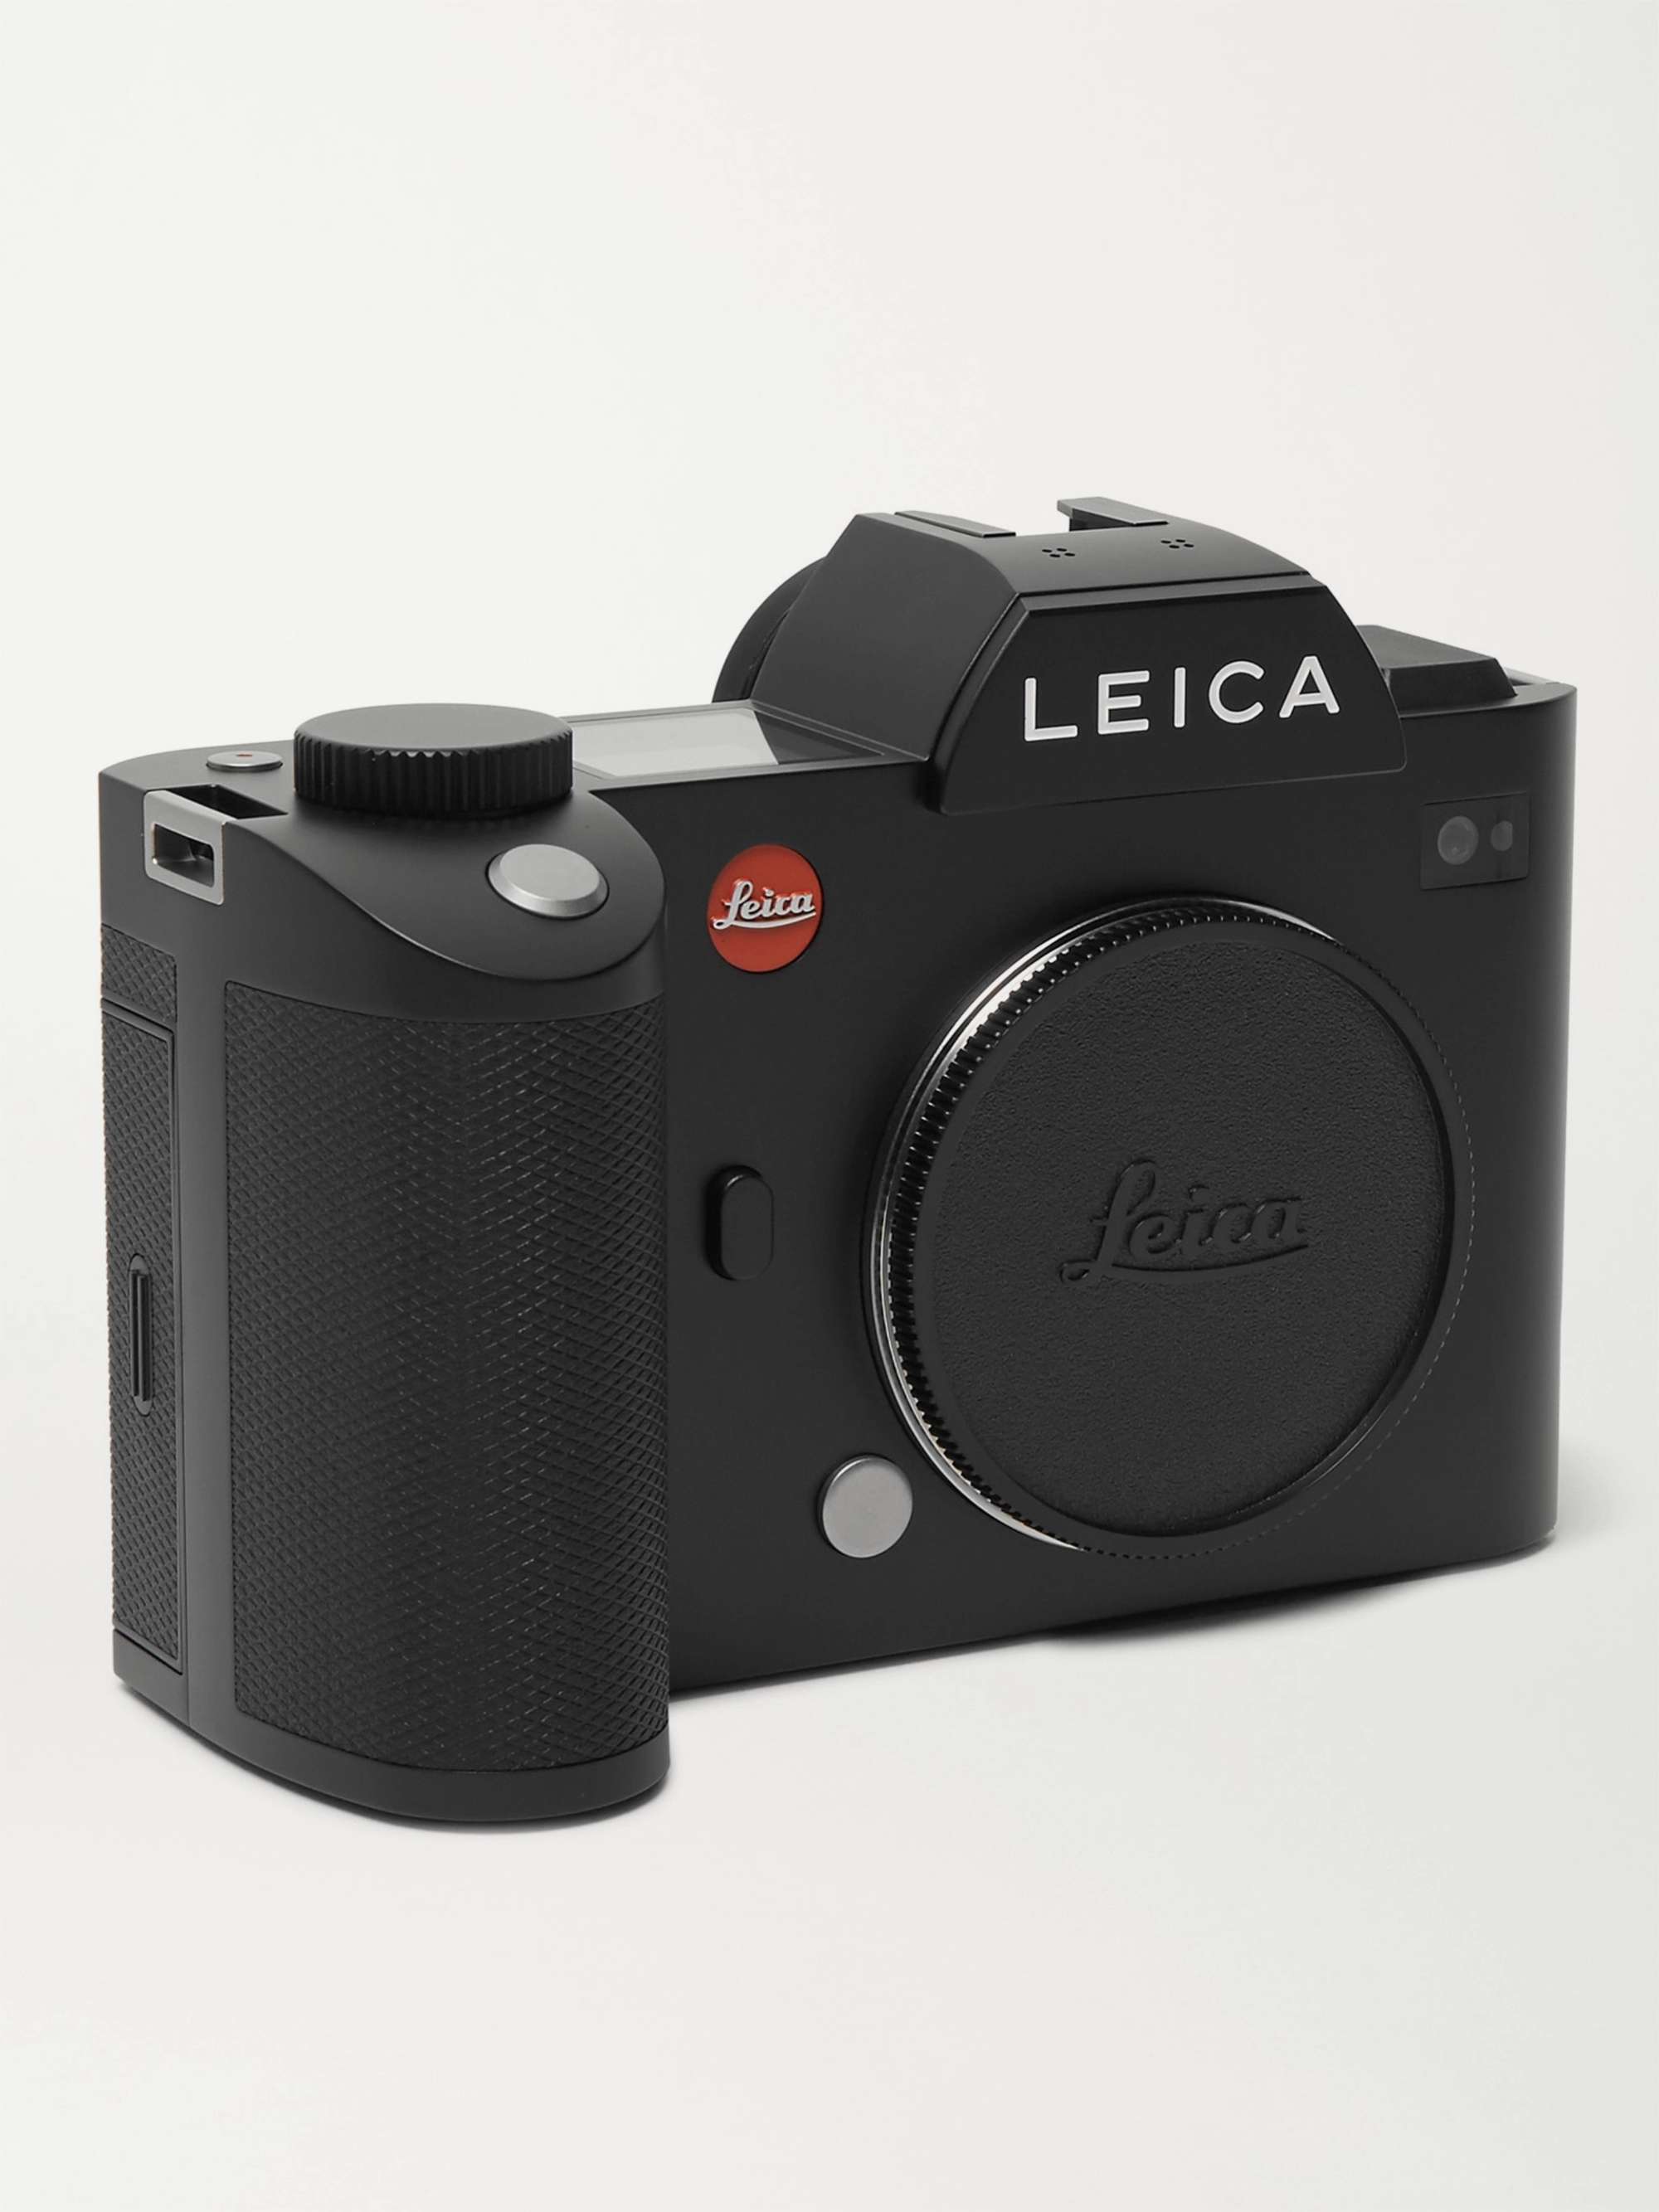 LEICA SL1 System Camera Body